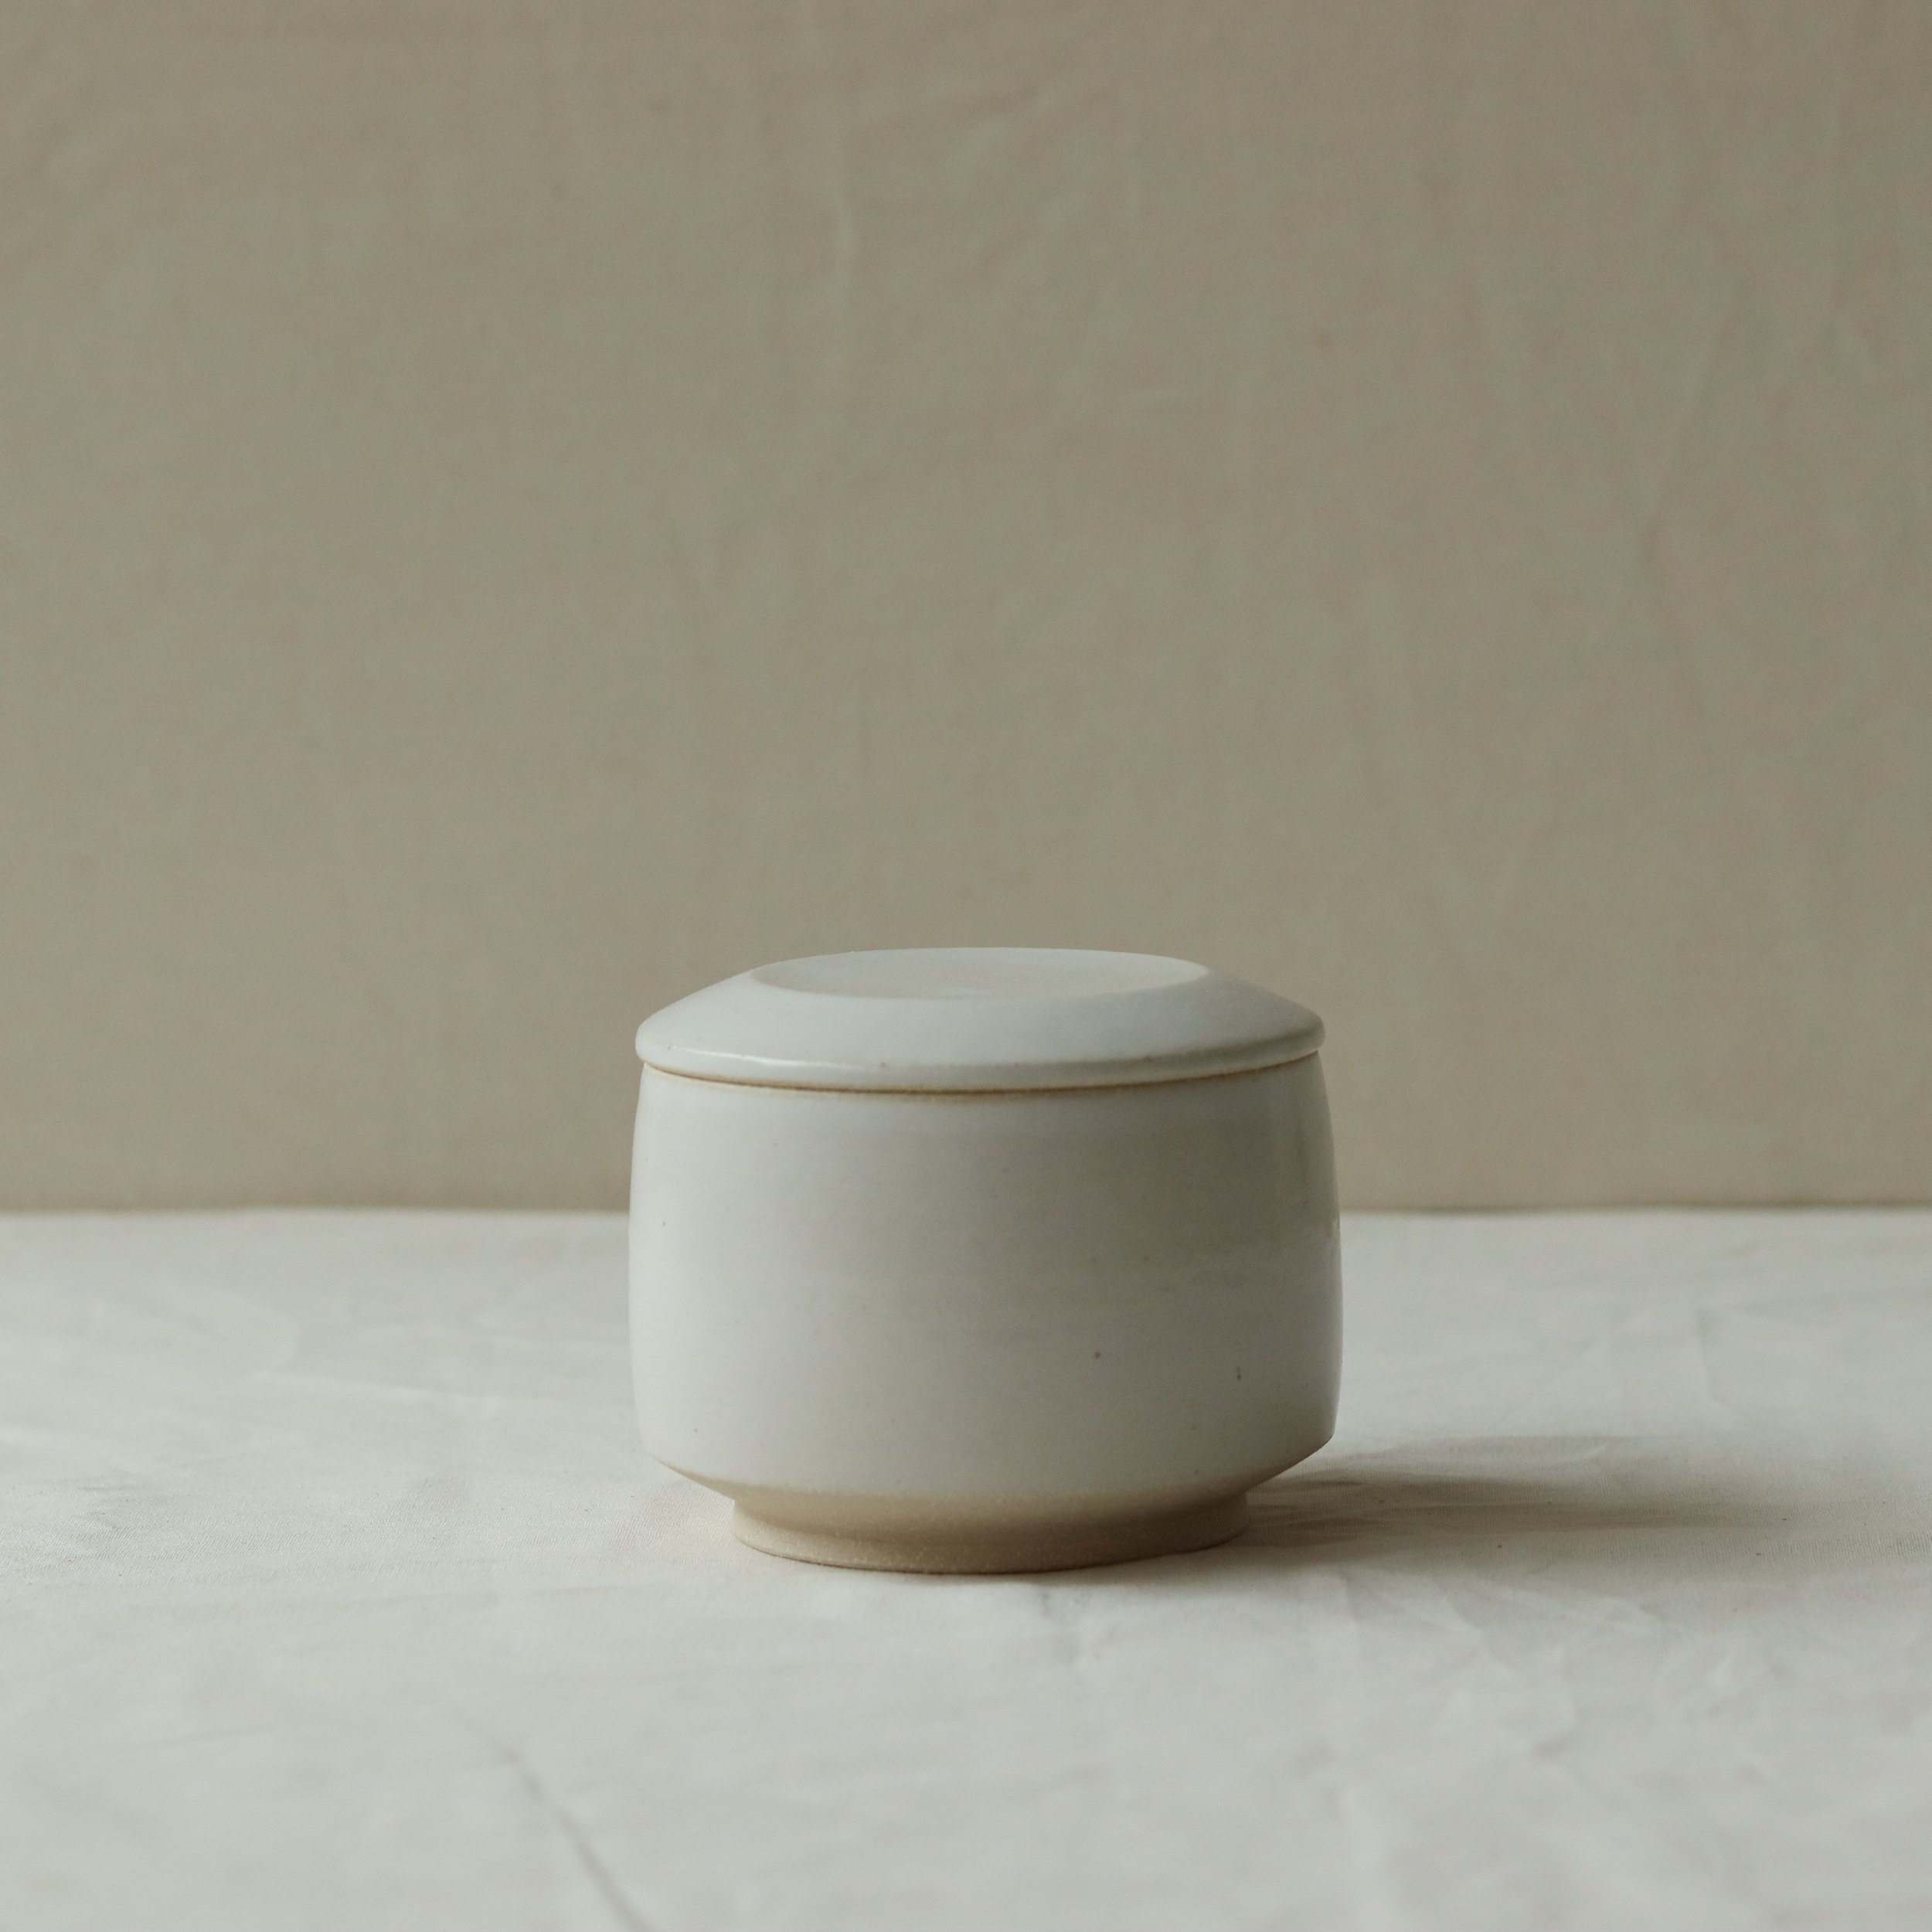 250ml Lidded Jar in Speckled White, Pale Stoneware -7.jpg